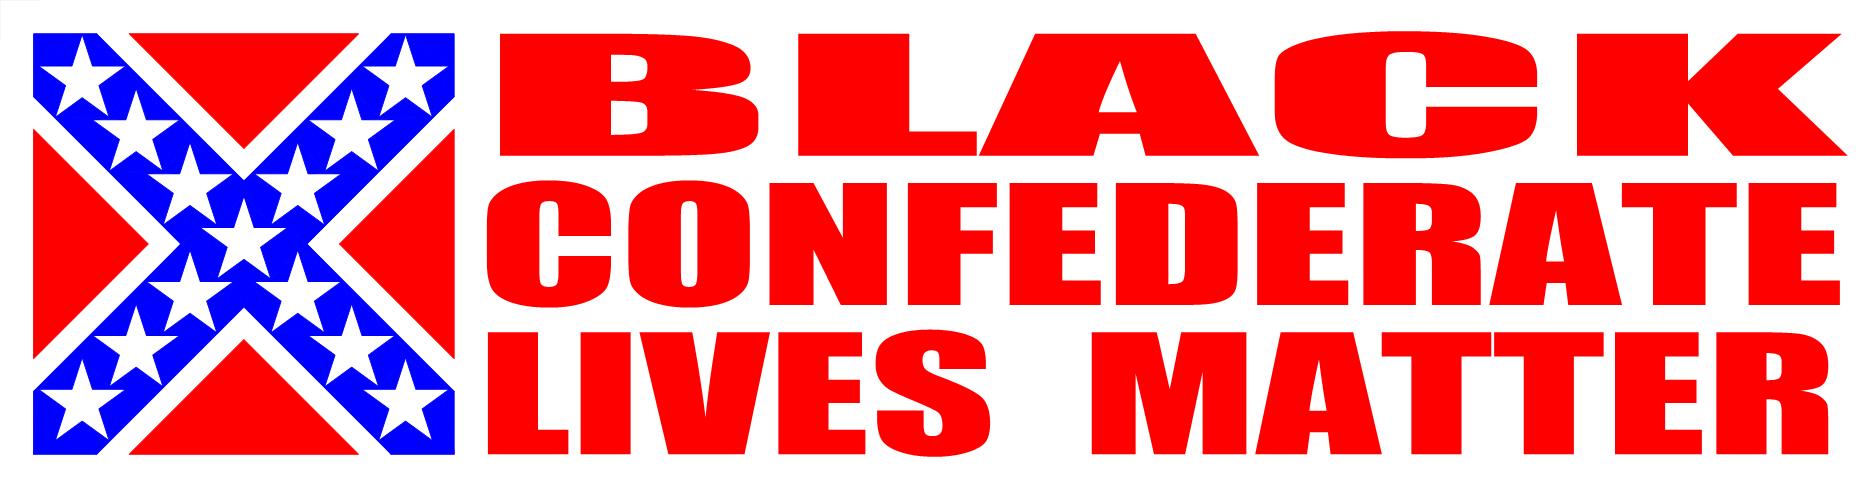 Black Confederate Matter